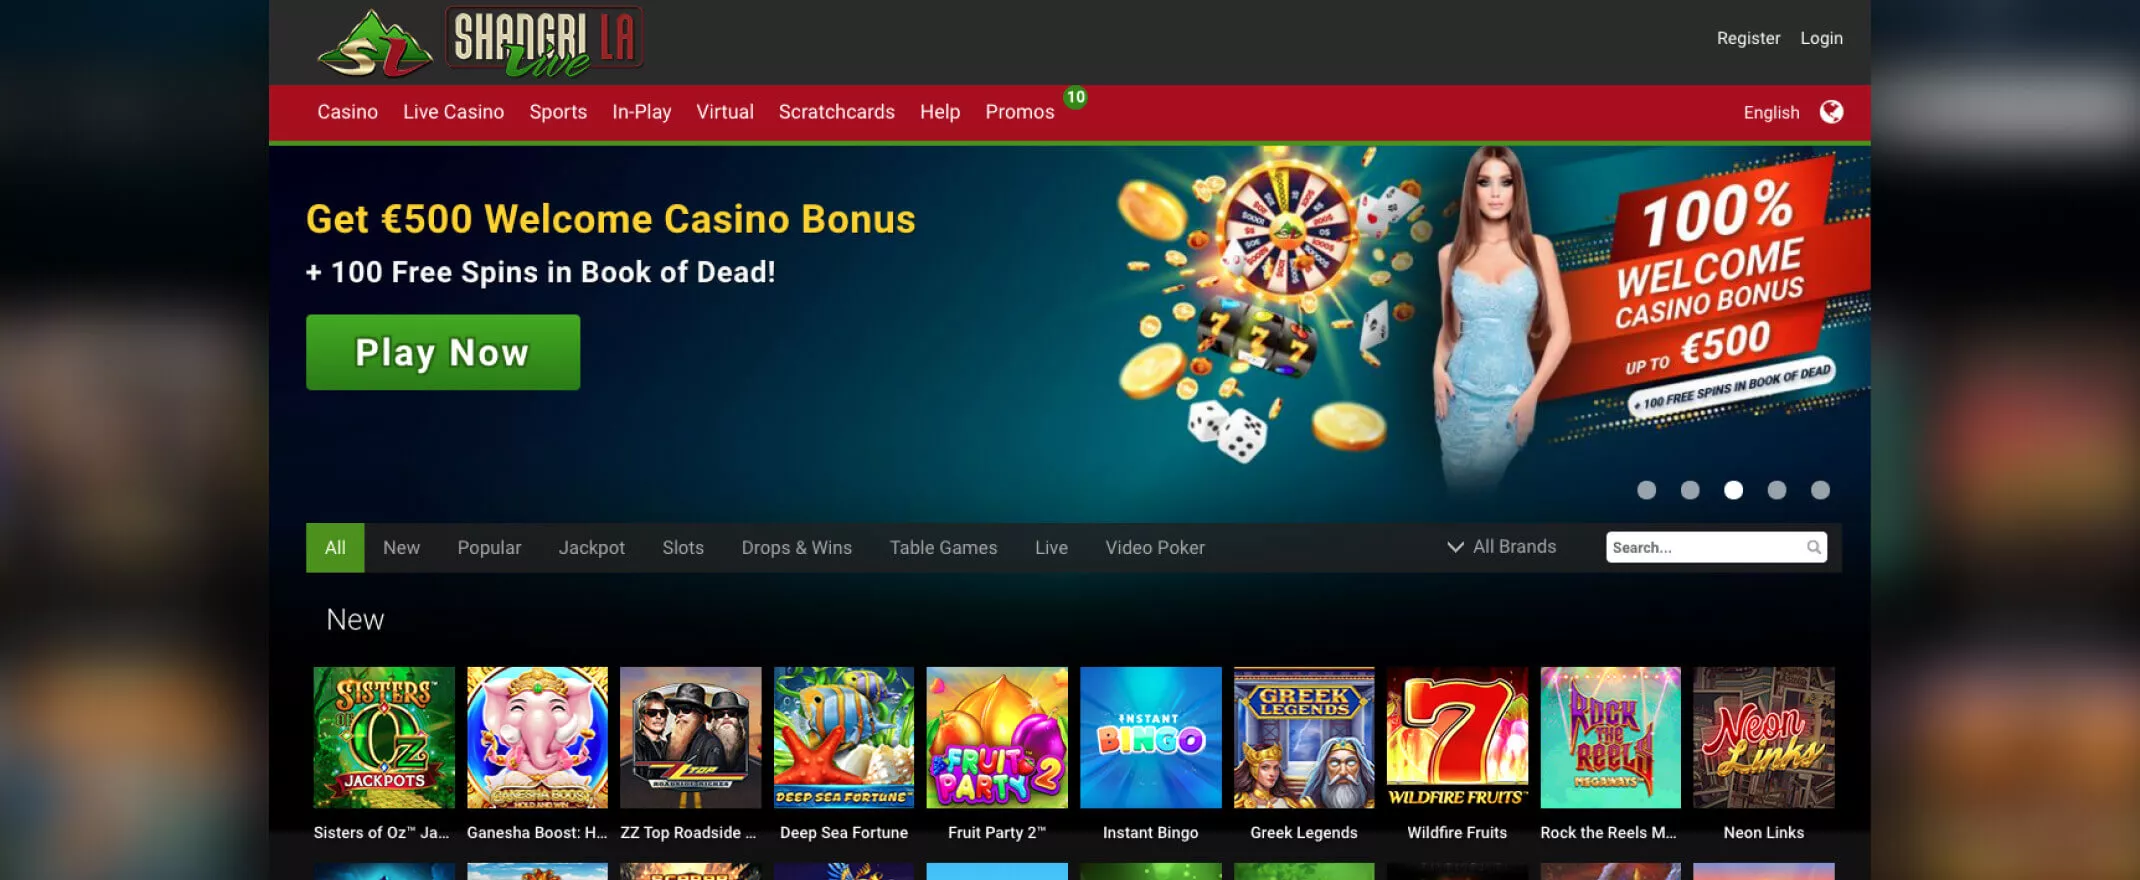 Shangri La Casino screenshot of the homepage